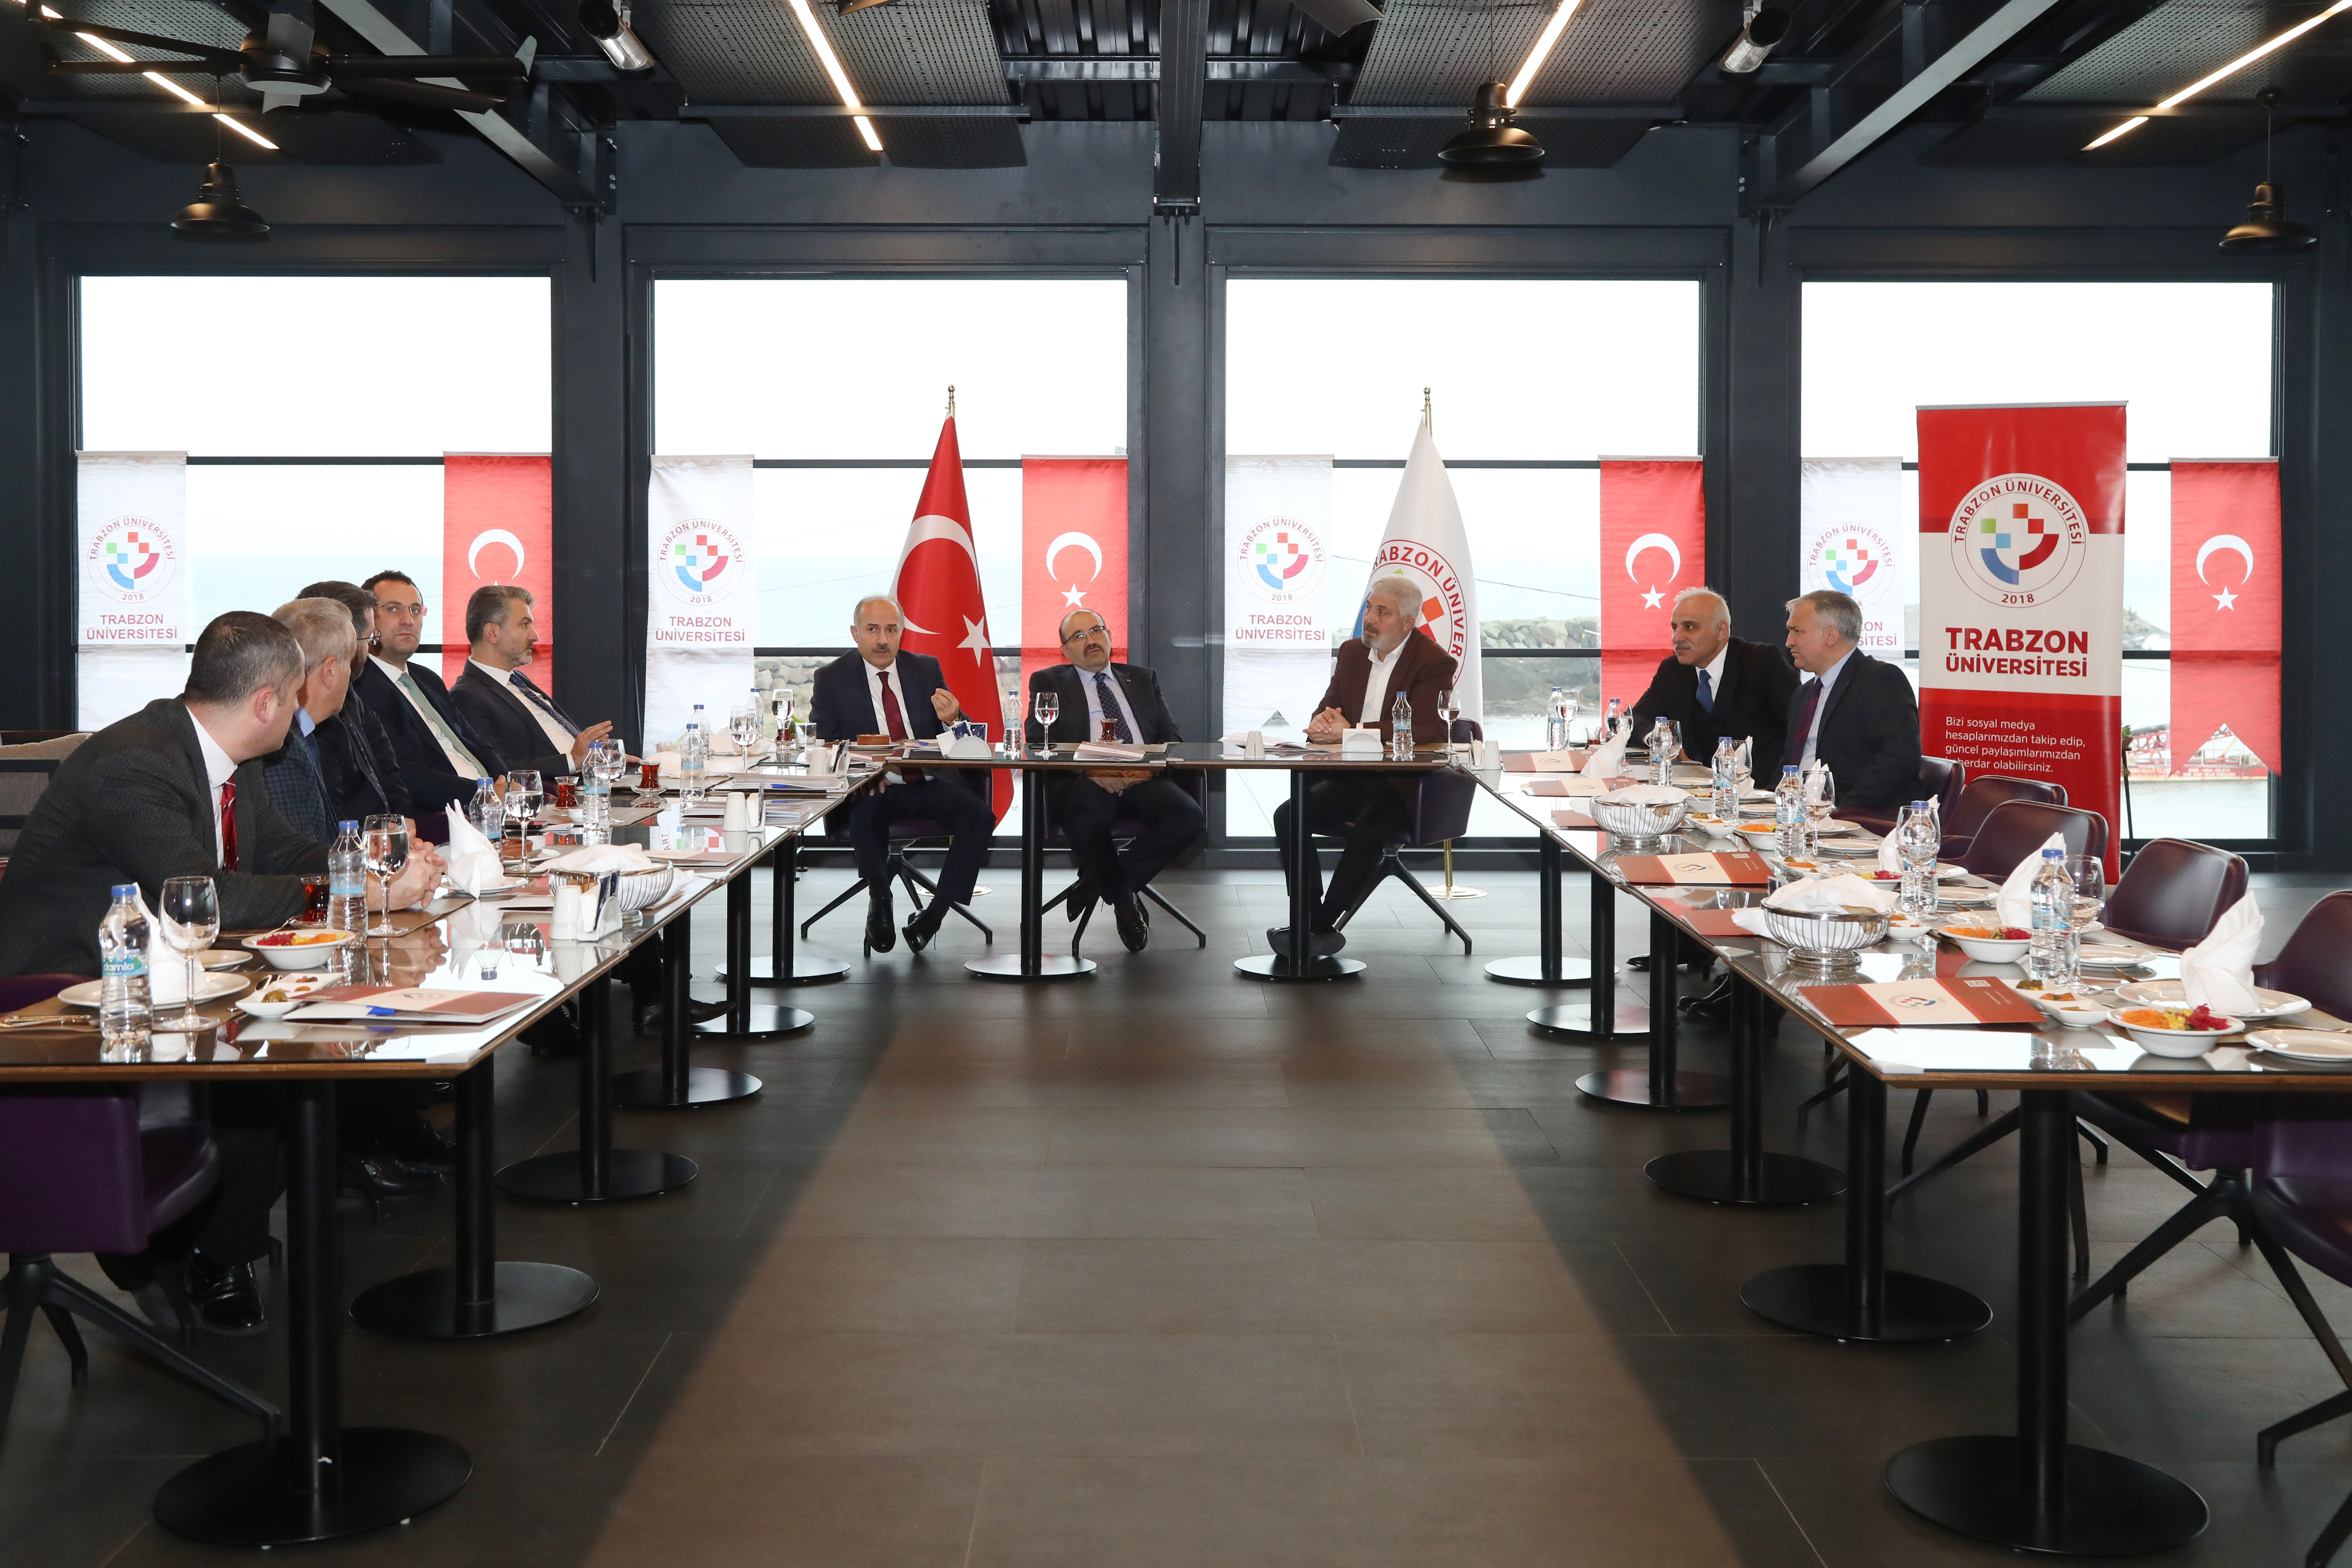 Trabzon niversitesinden Strateji Belirleme Toplants

